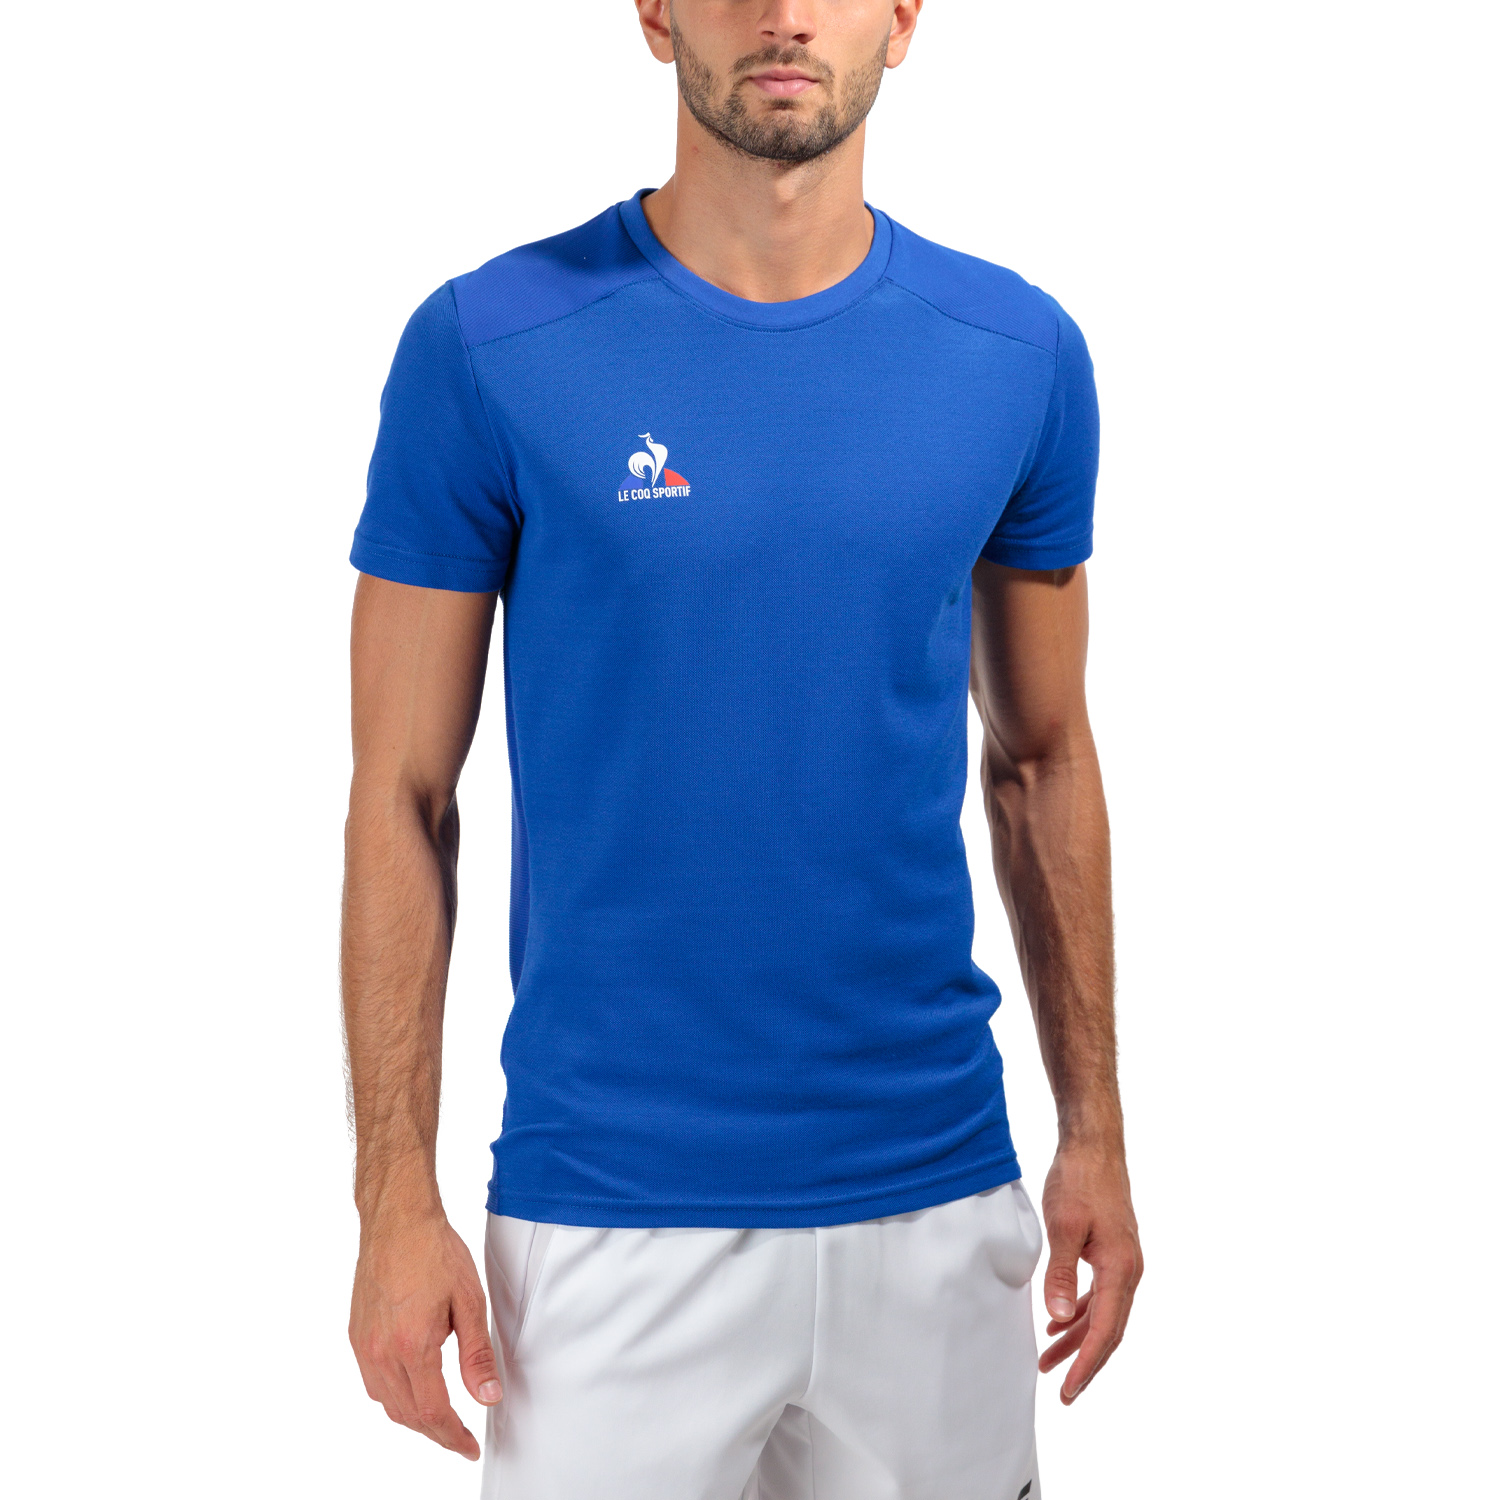 Le Coq Sportif Performance Camiseta - Cobalt